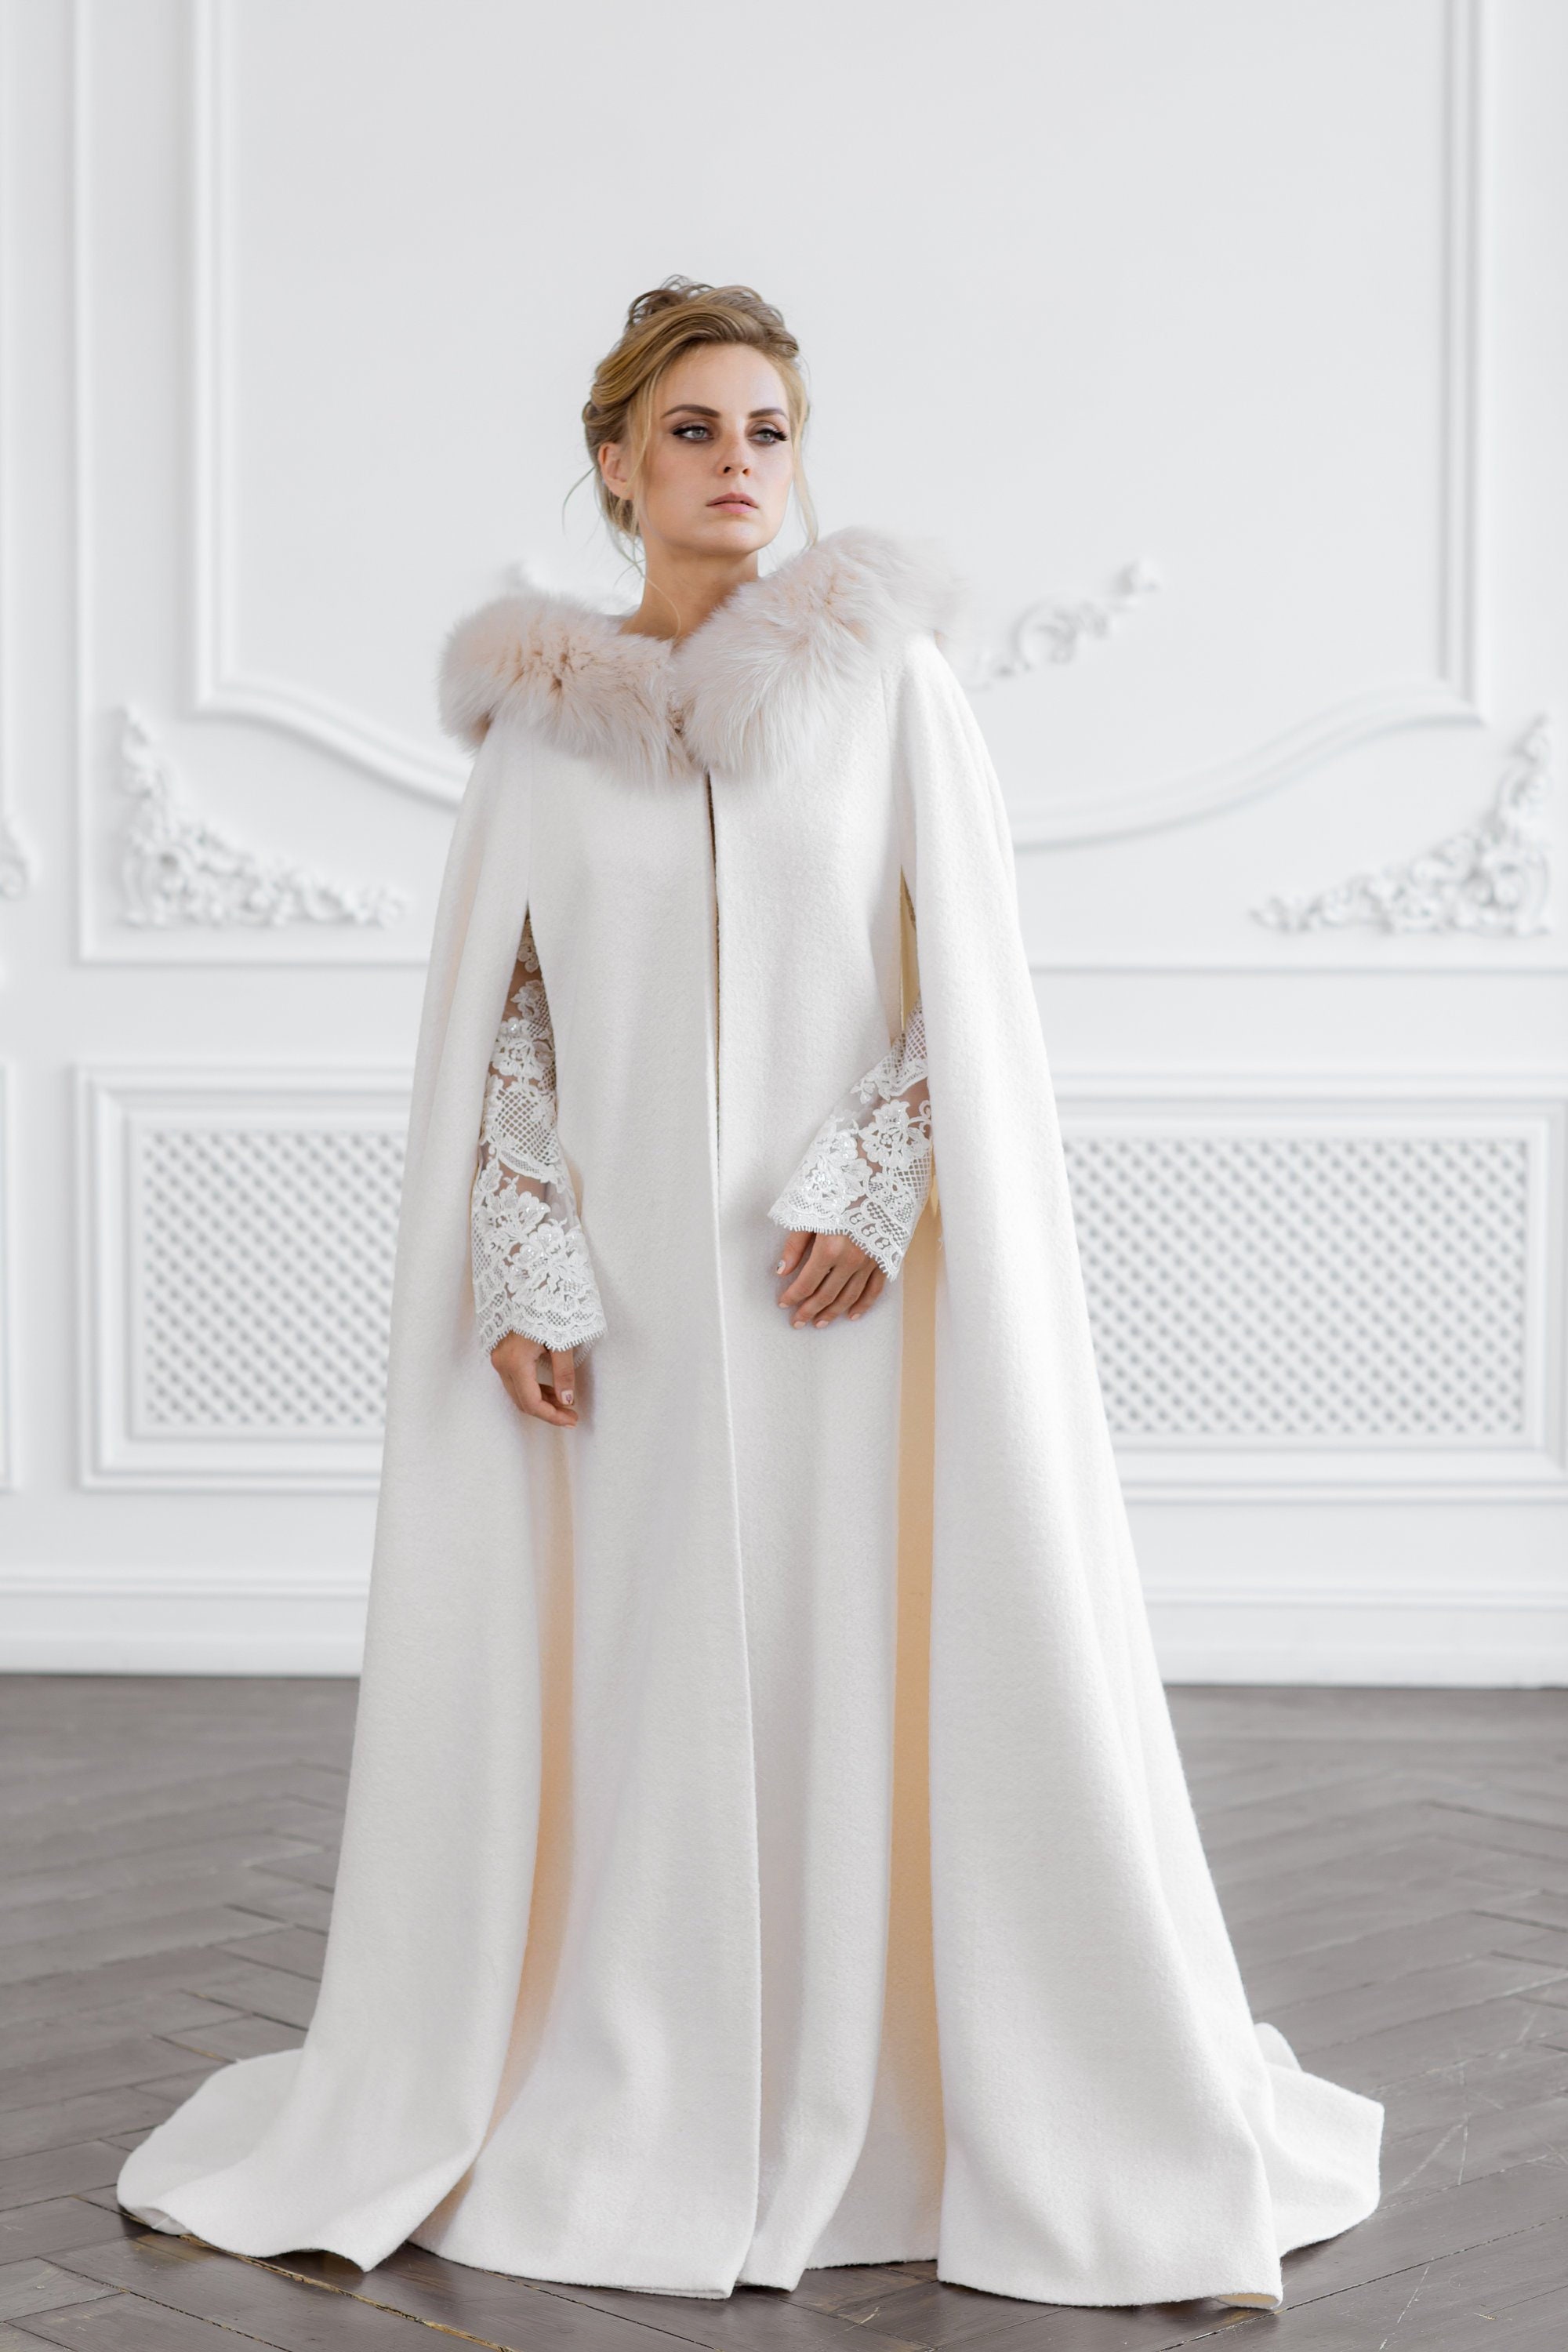 Wedding Cape Coat for Winter Wedding Dress, Fur Bridal Jacket for